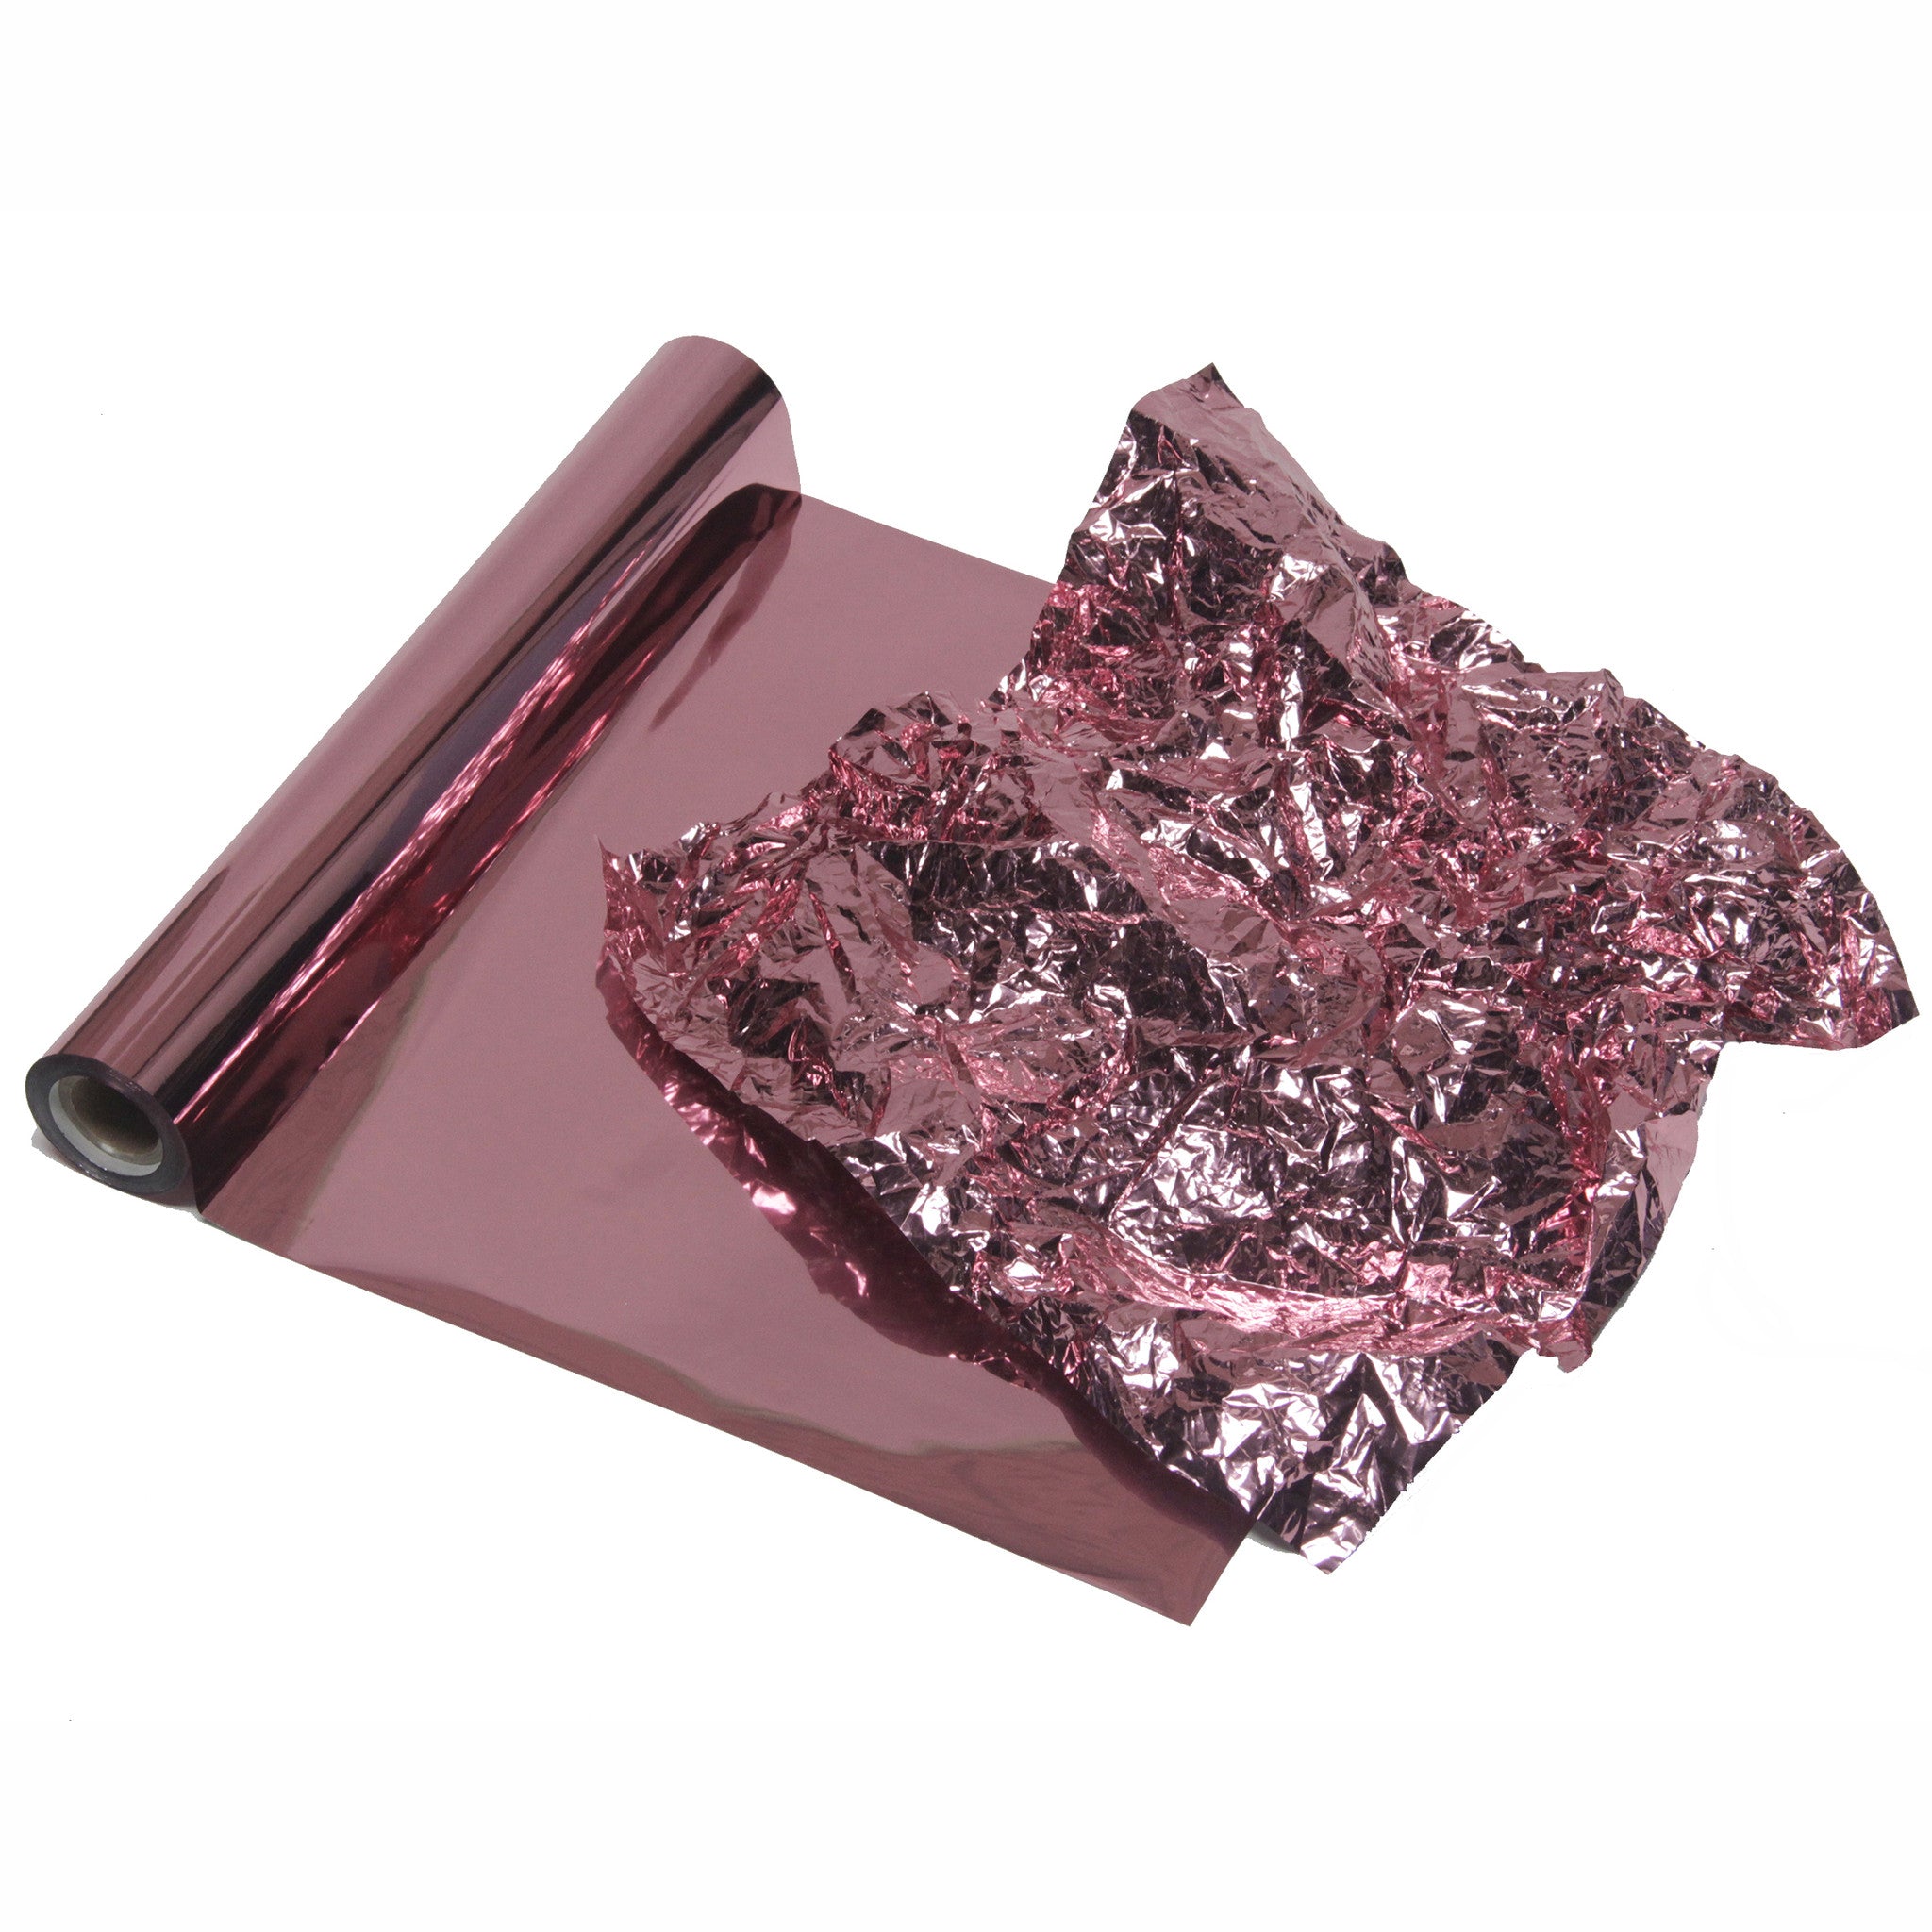 NEW Color- Light Rose Metallic Foil